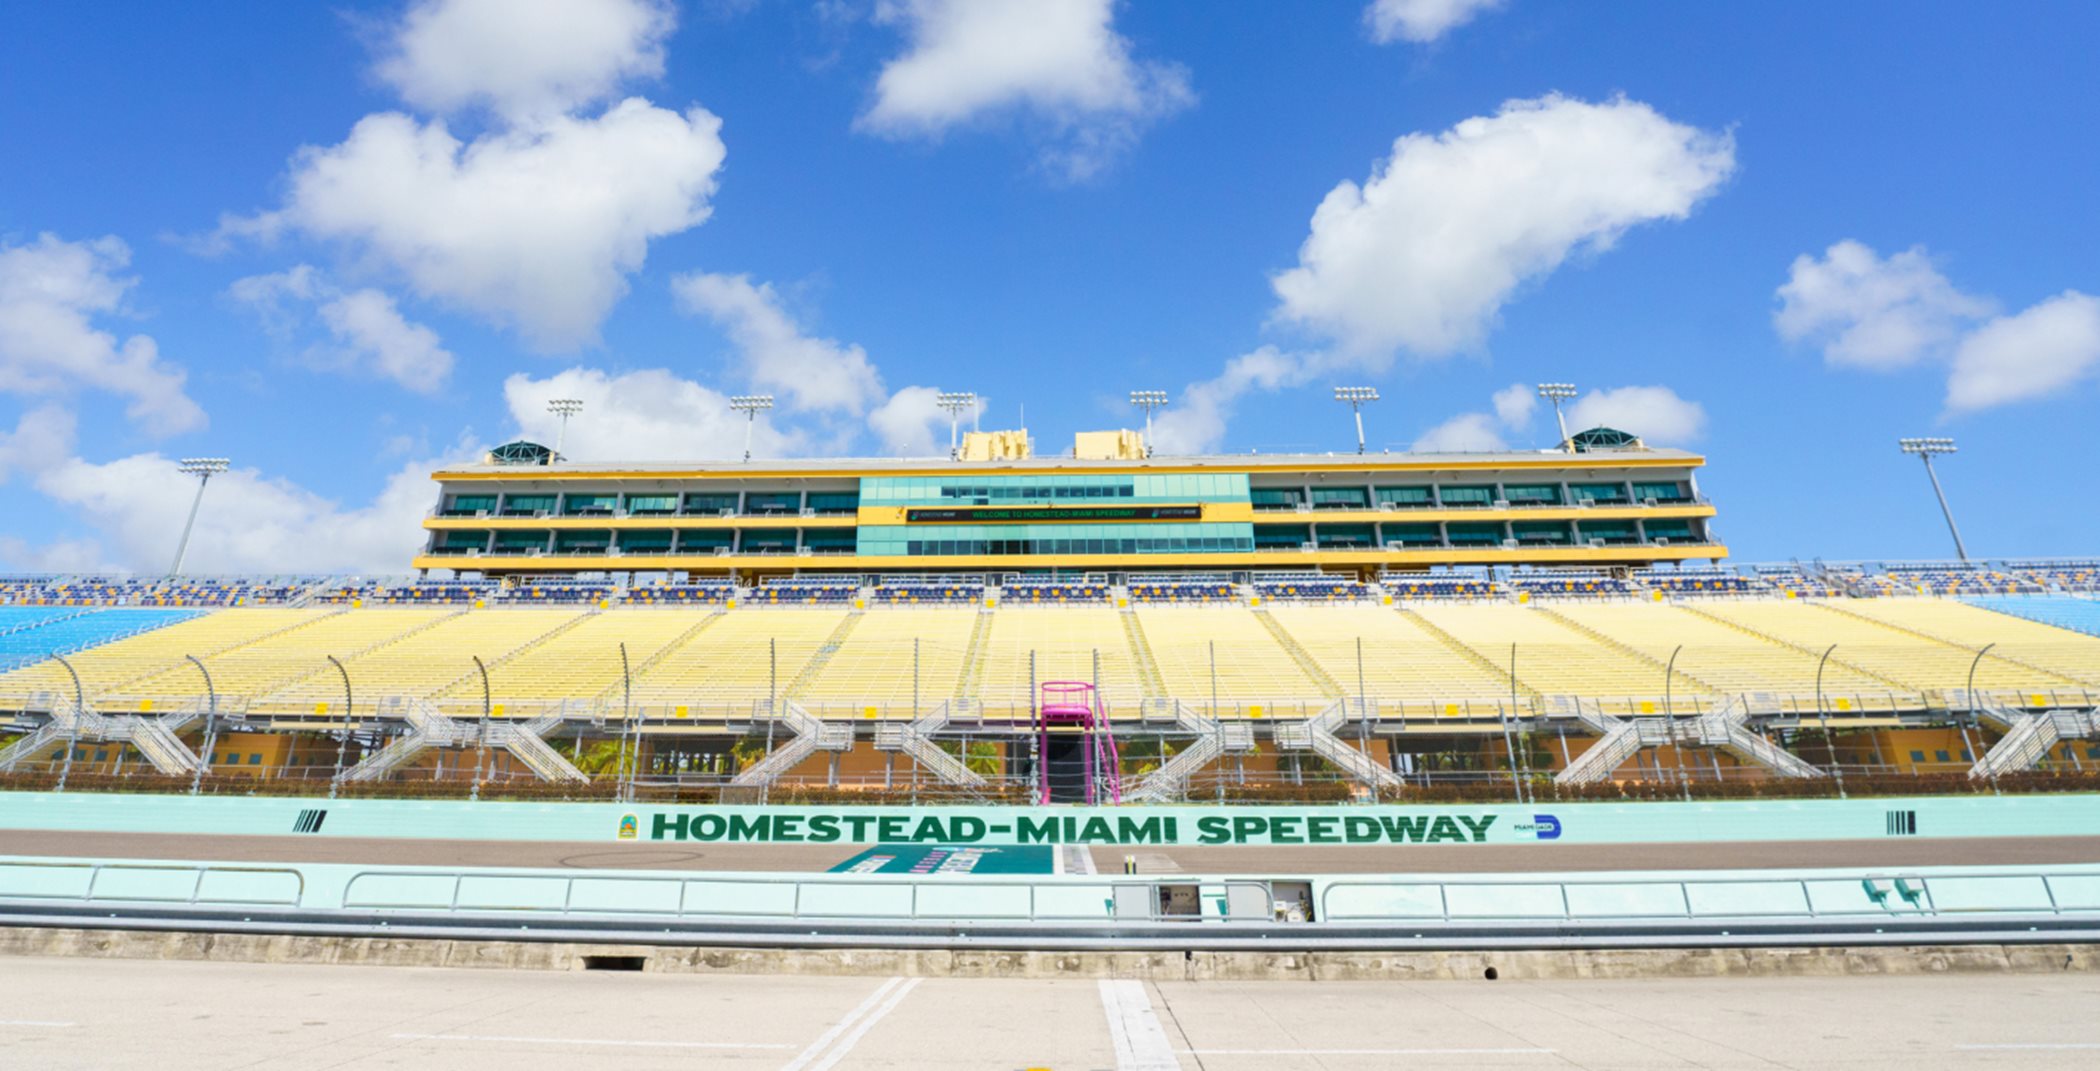 Homestead-Miami Speedway sign